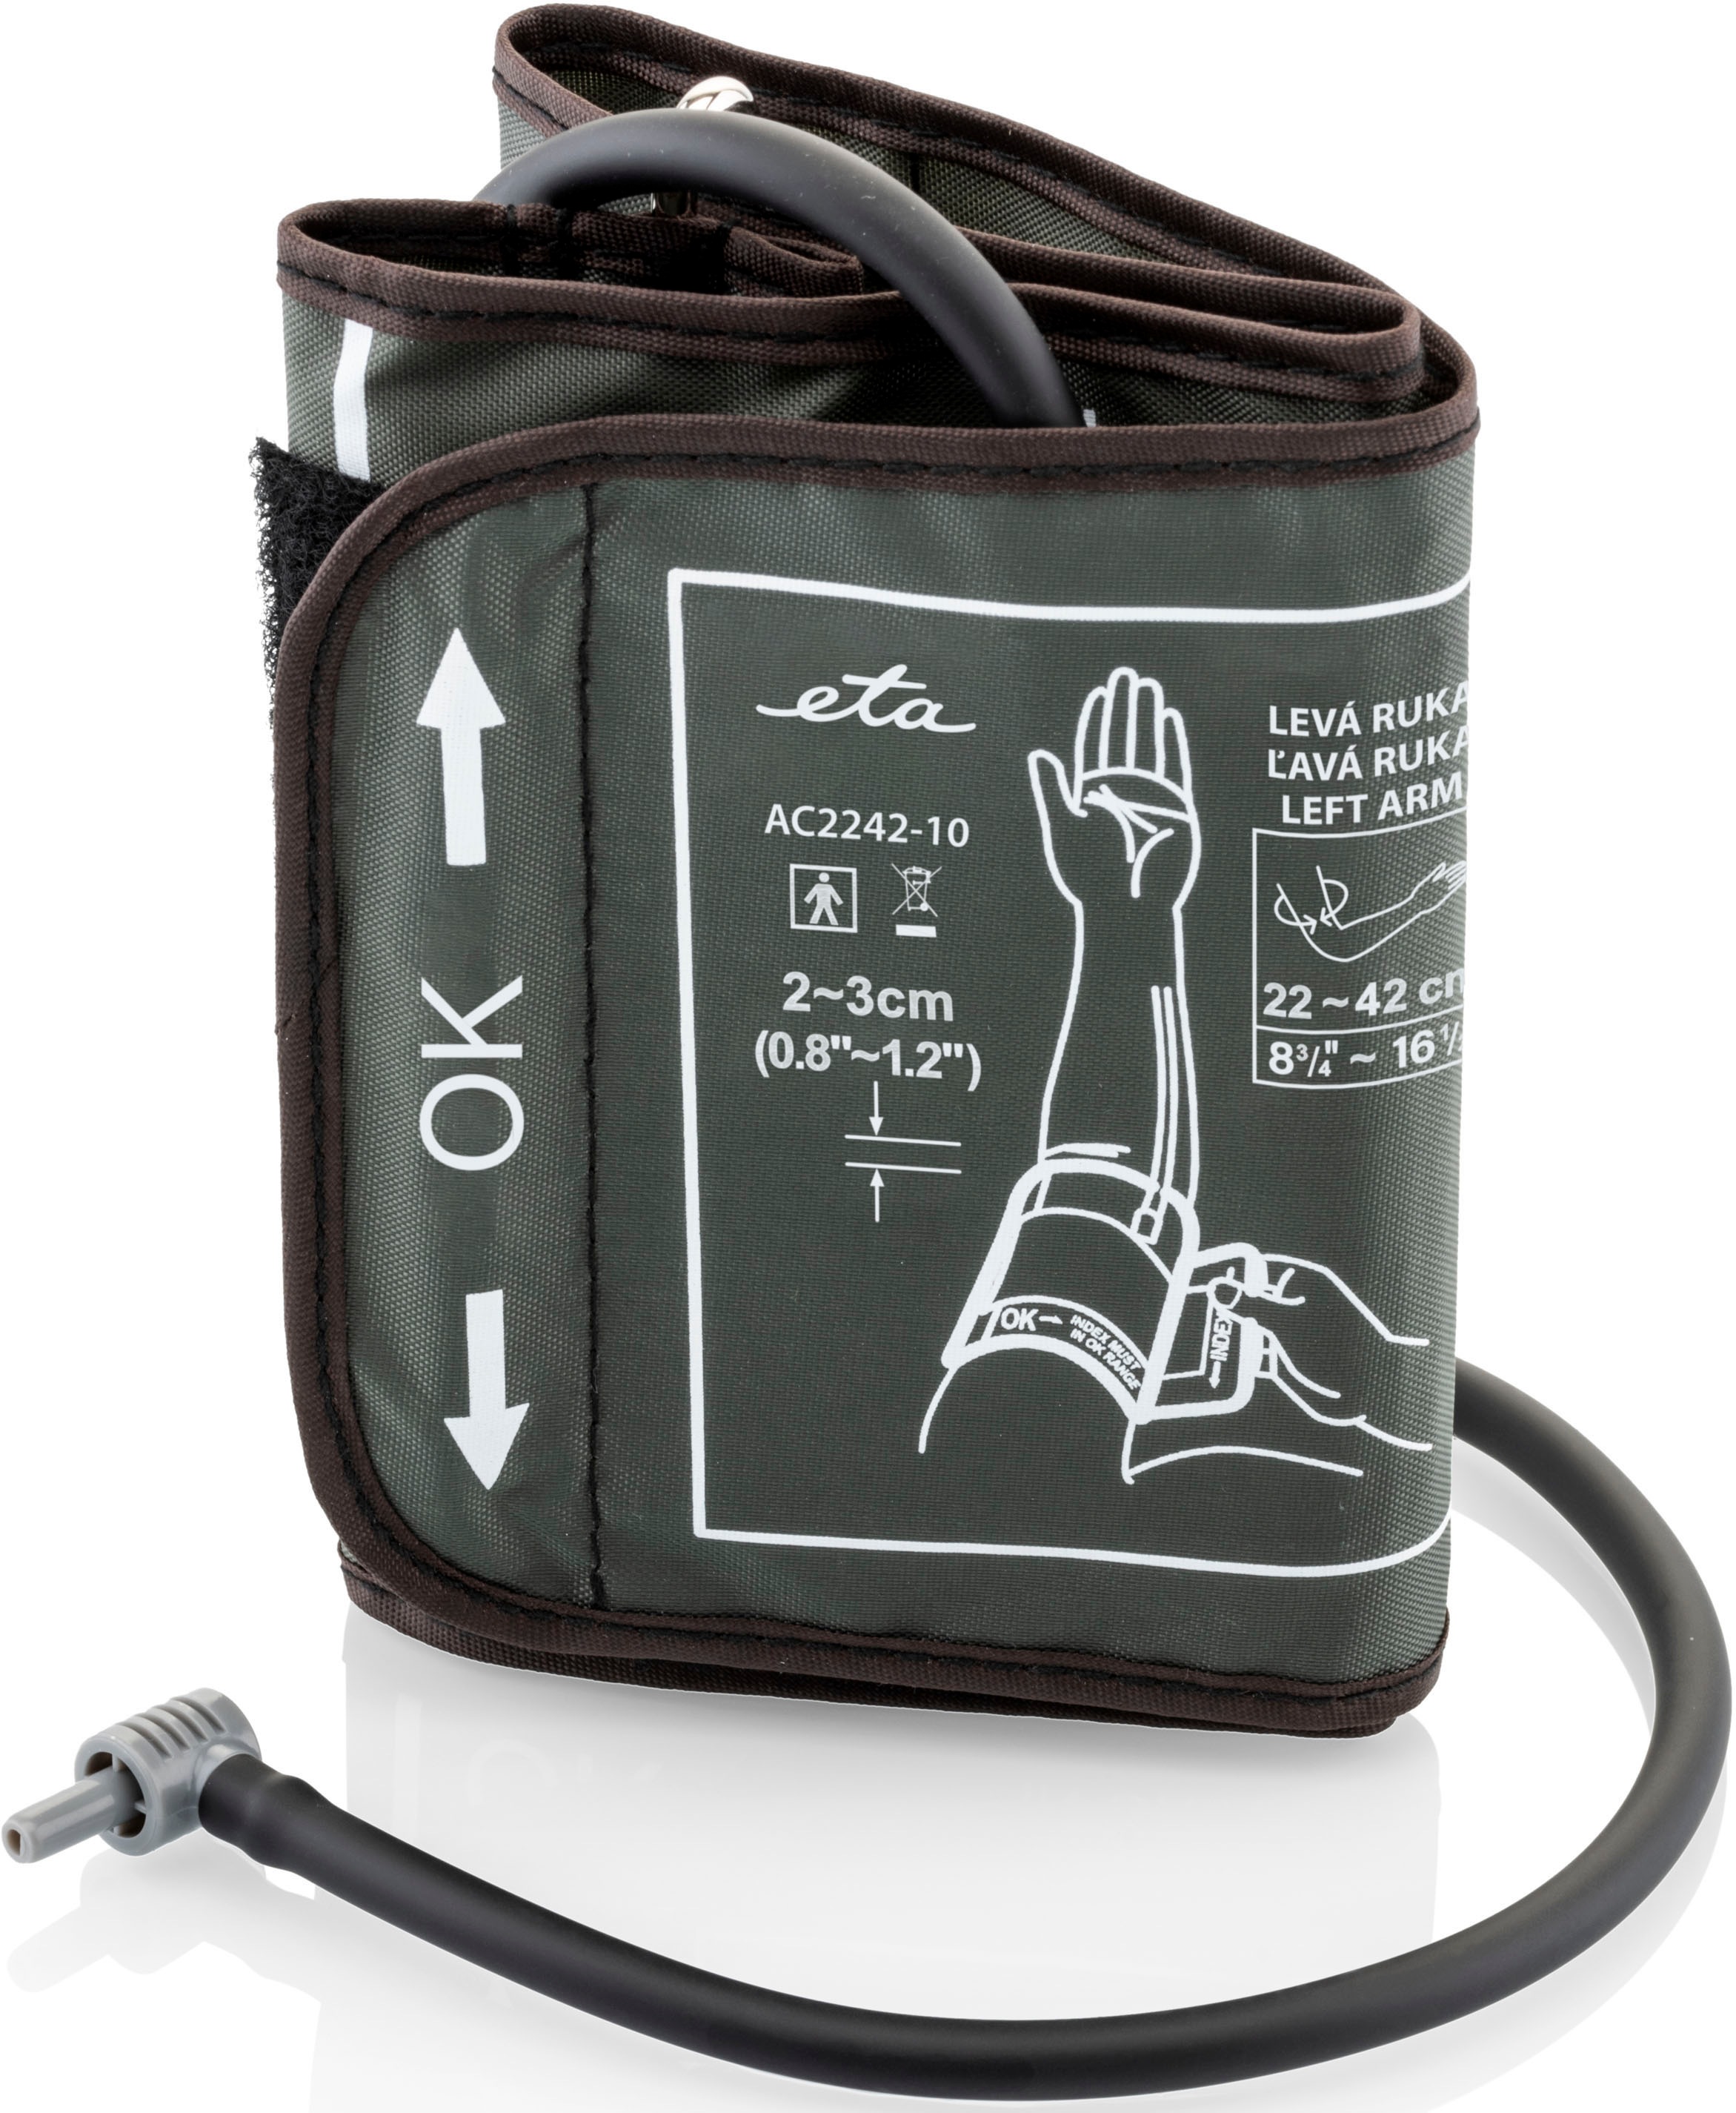 TMB-1583-BS Smart Blood Pressure Monitor